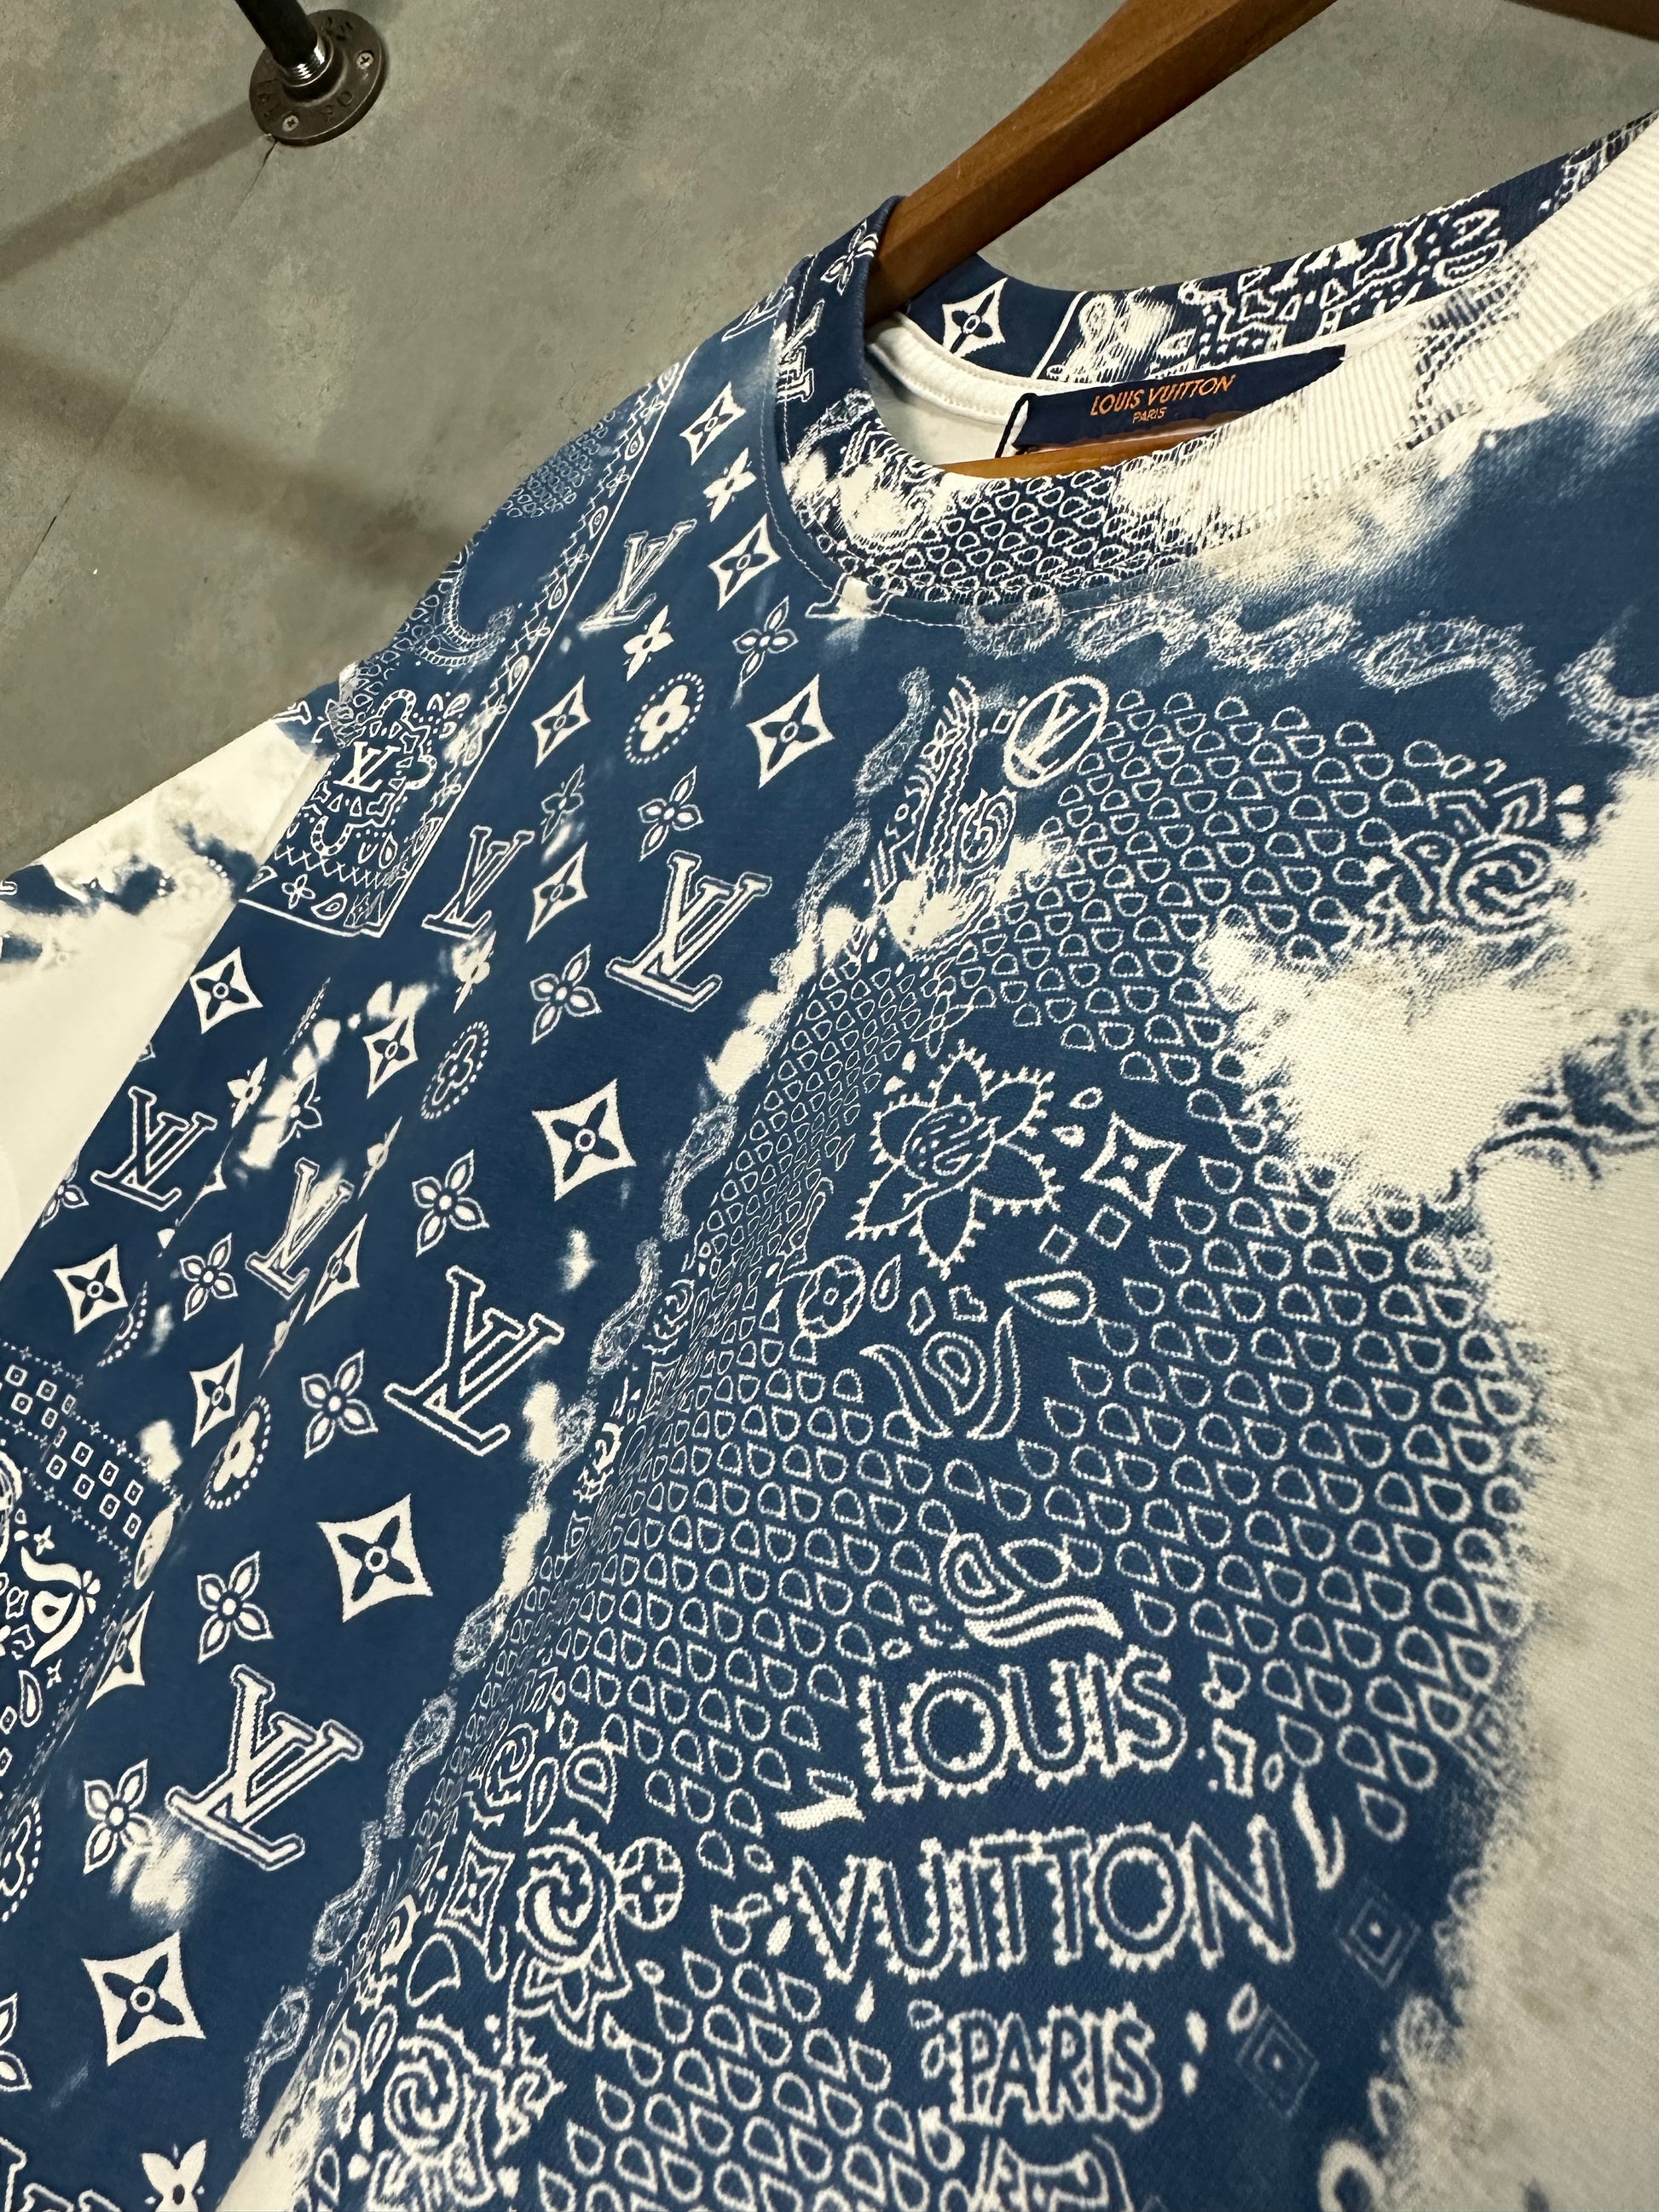 Louis Vuitton Monogram Bandana Printed T-Shirt Blue/White Men's